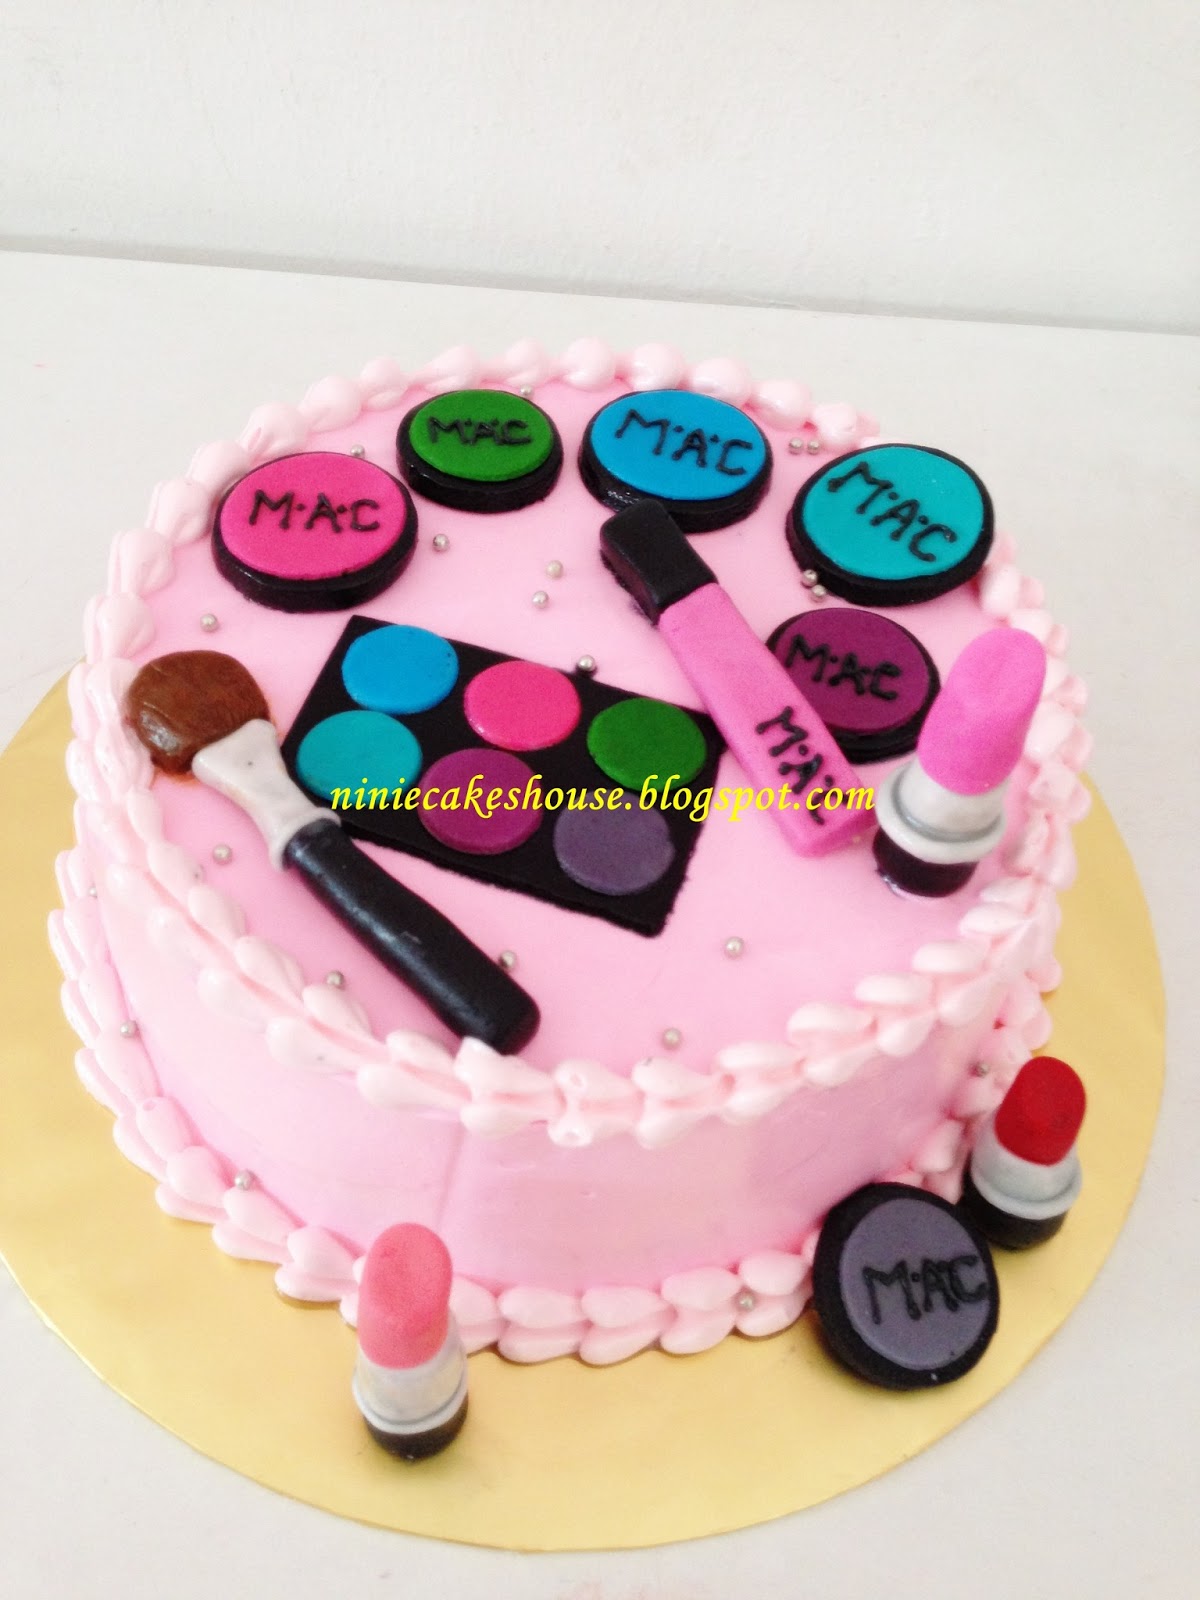 Ninie cakes house: MAC Make up set Birthday cake.